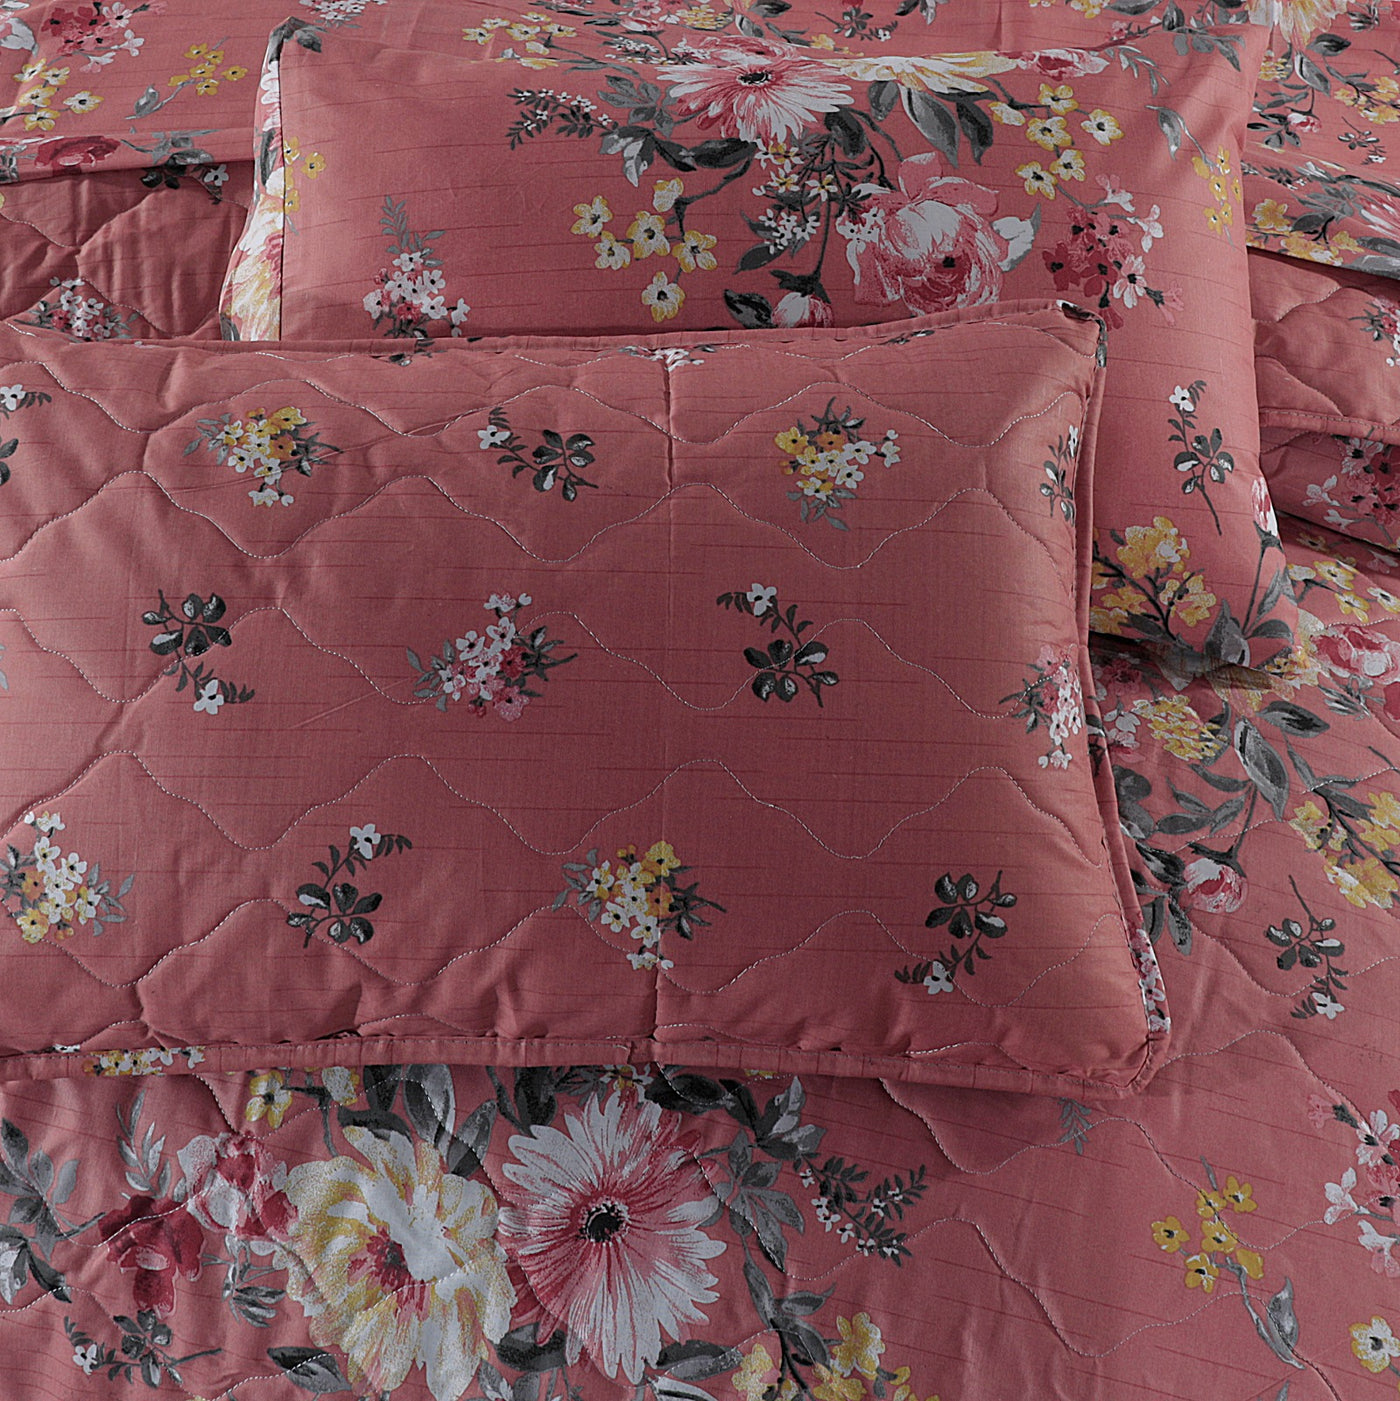 TEA FLOWER- Summer Comforter Set (Light Filling)